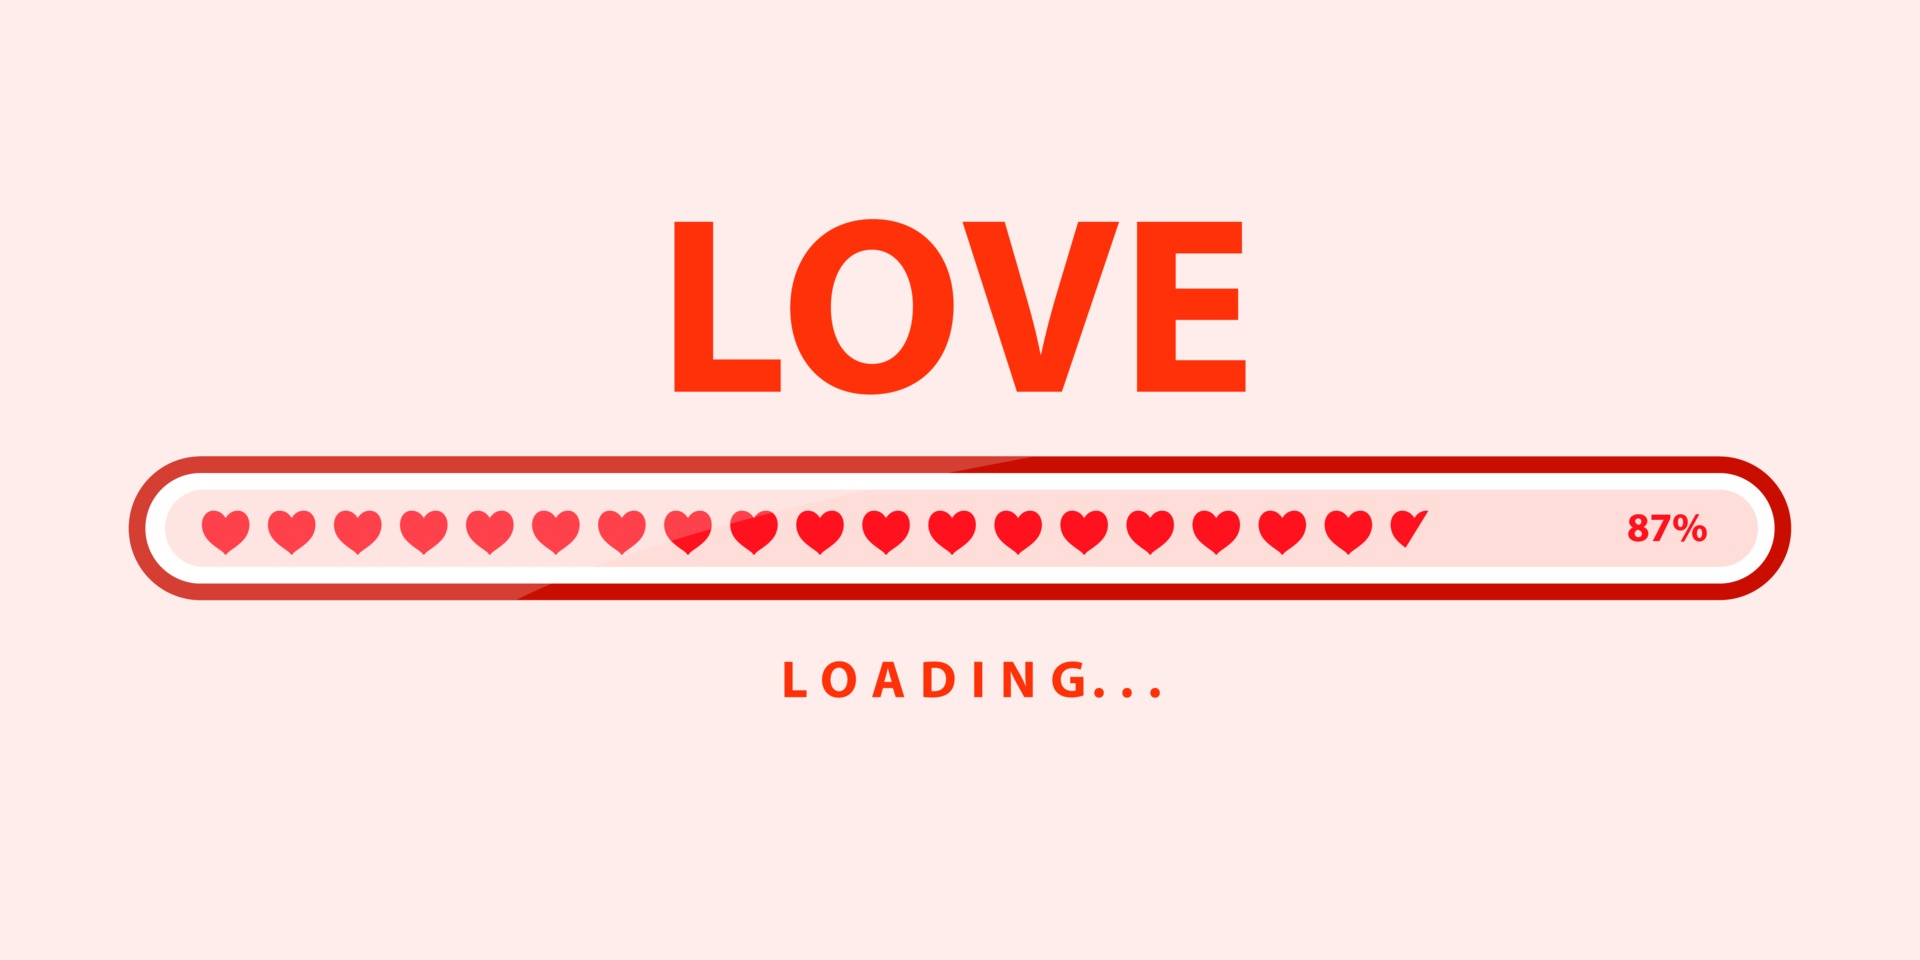 Love loading. Лодинг лов. Лоадинг сердце. Illustrator loading. Load illustration.